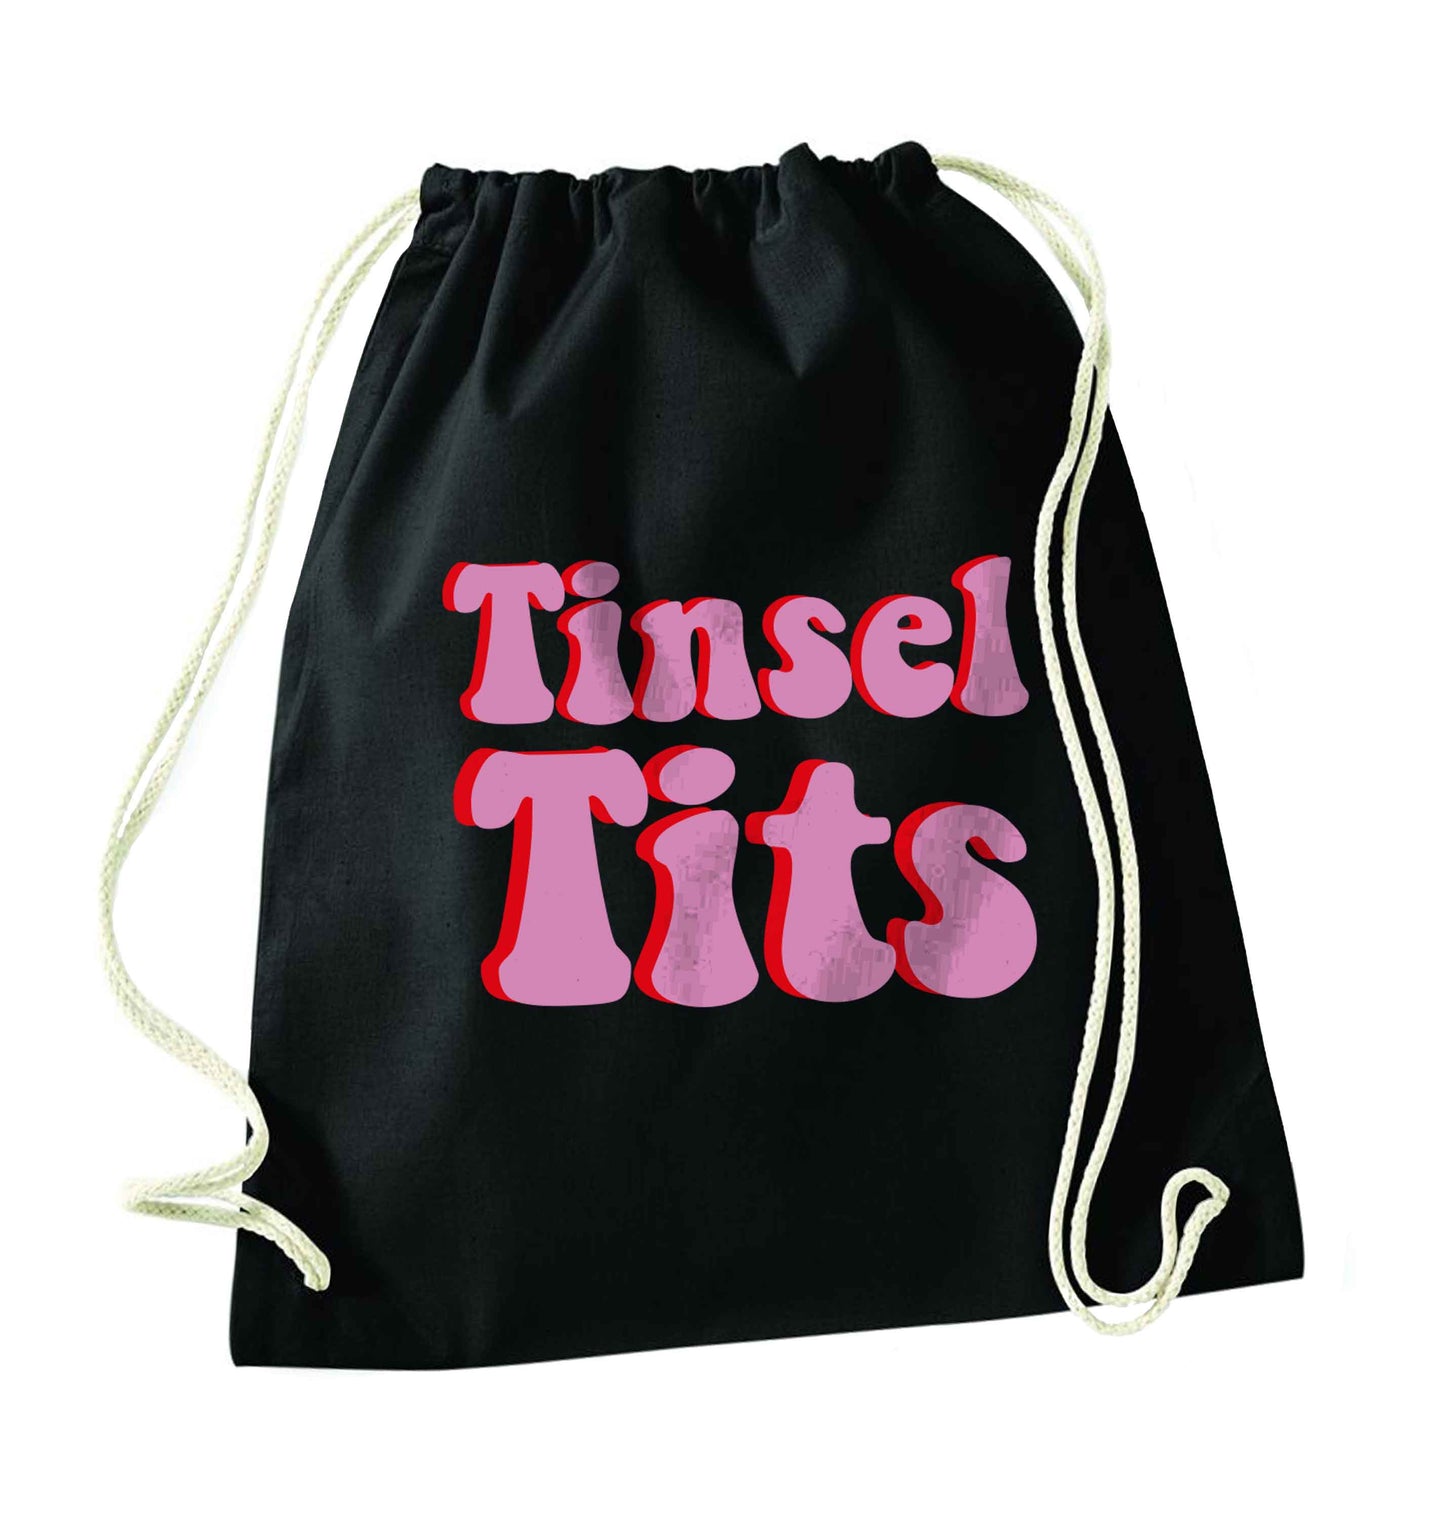 Tinsel tits black drawstring bag